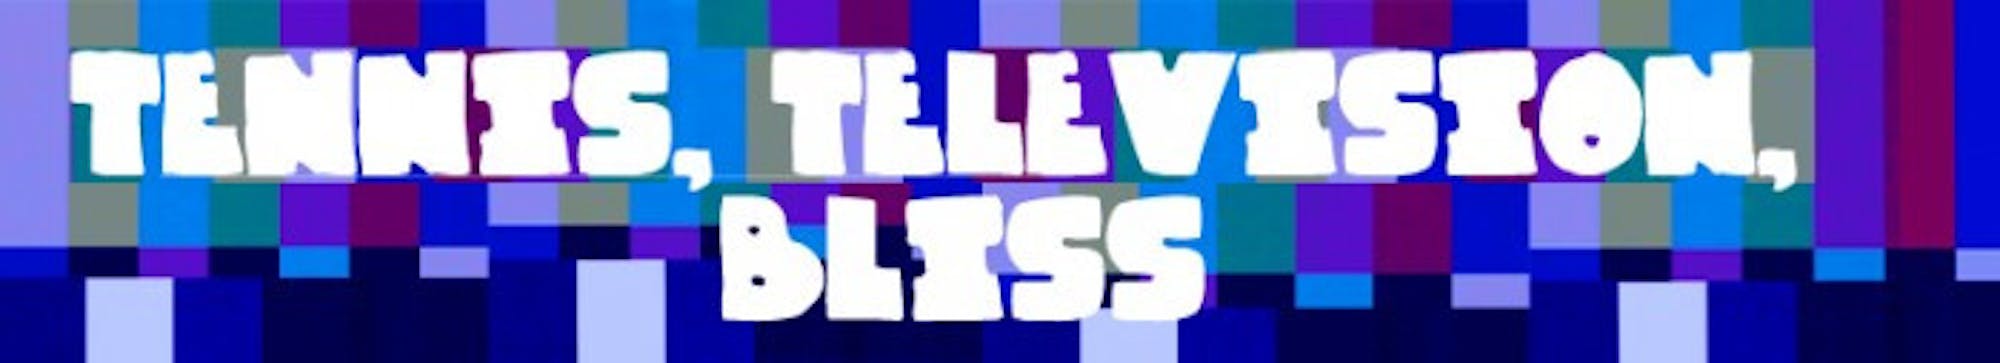 tv banner web